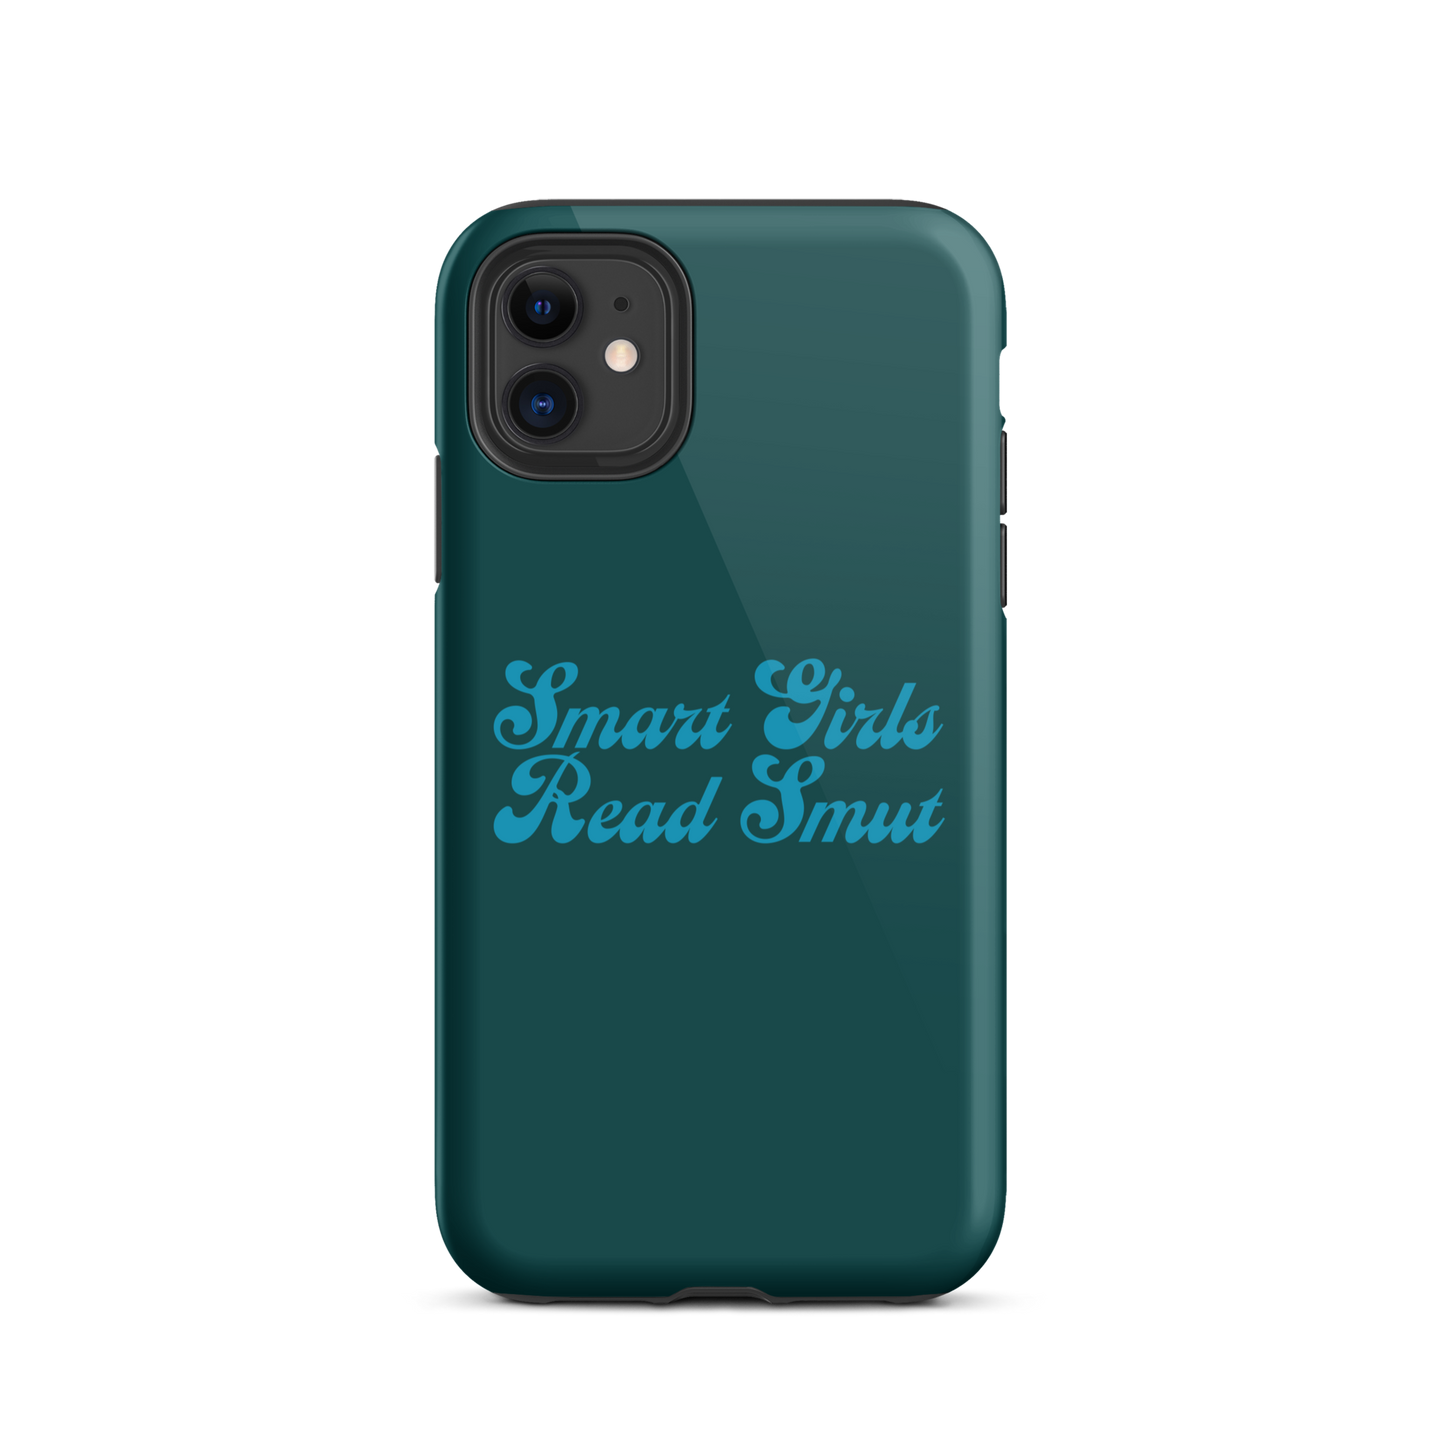 Smart Girls Read Smut iPhone Case